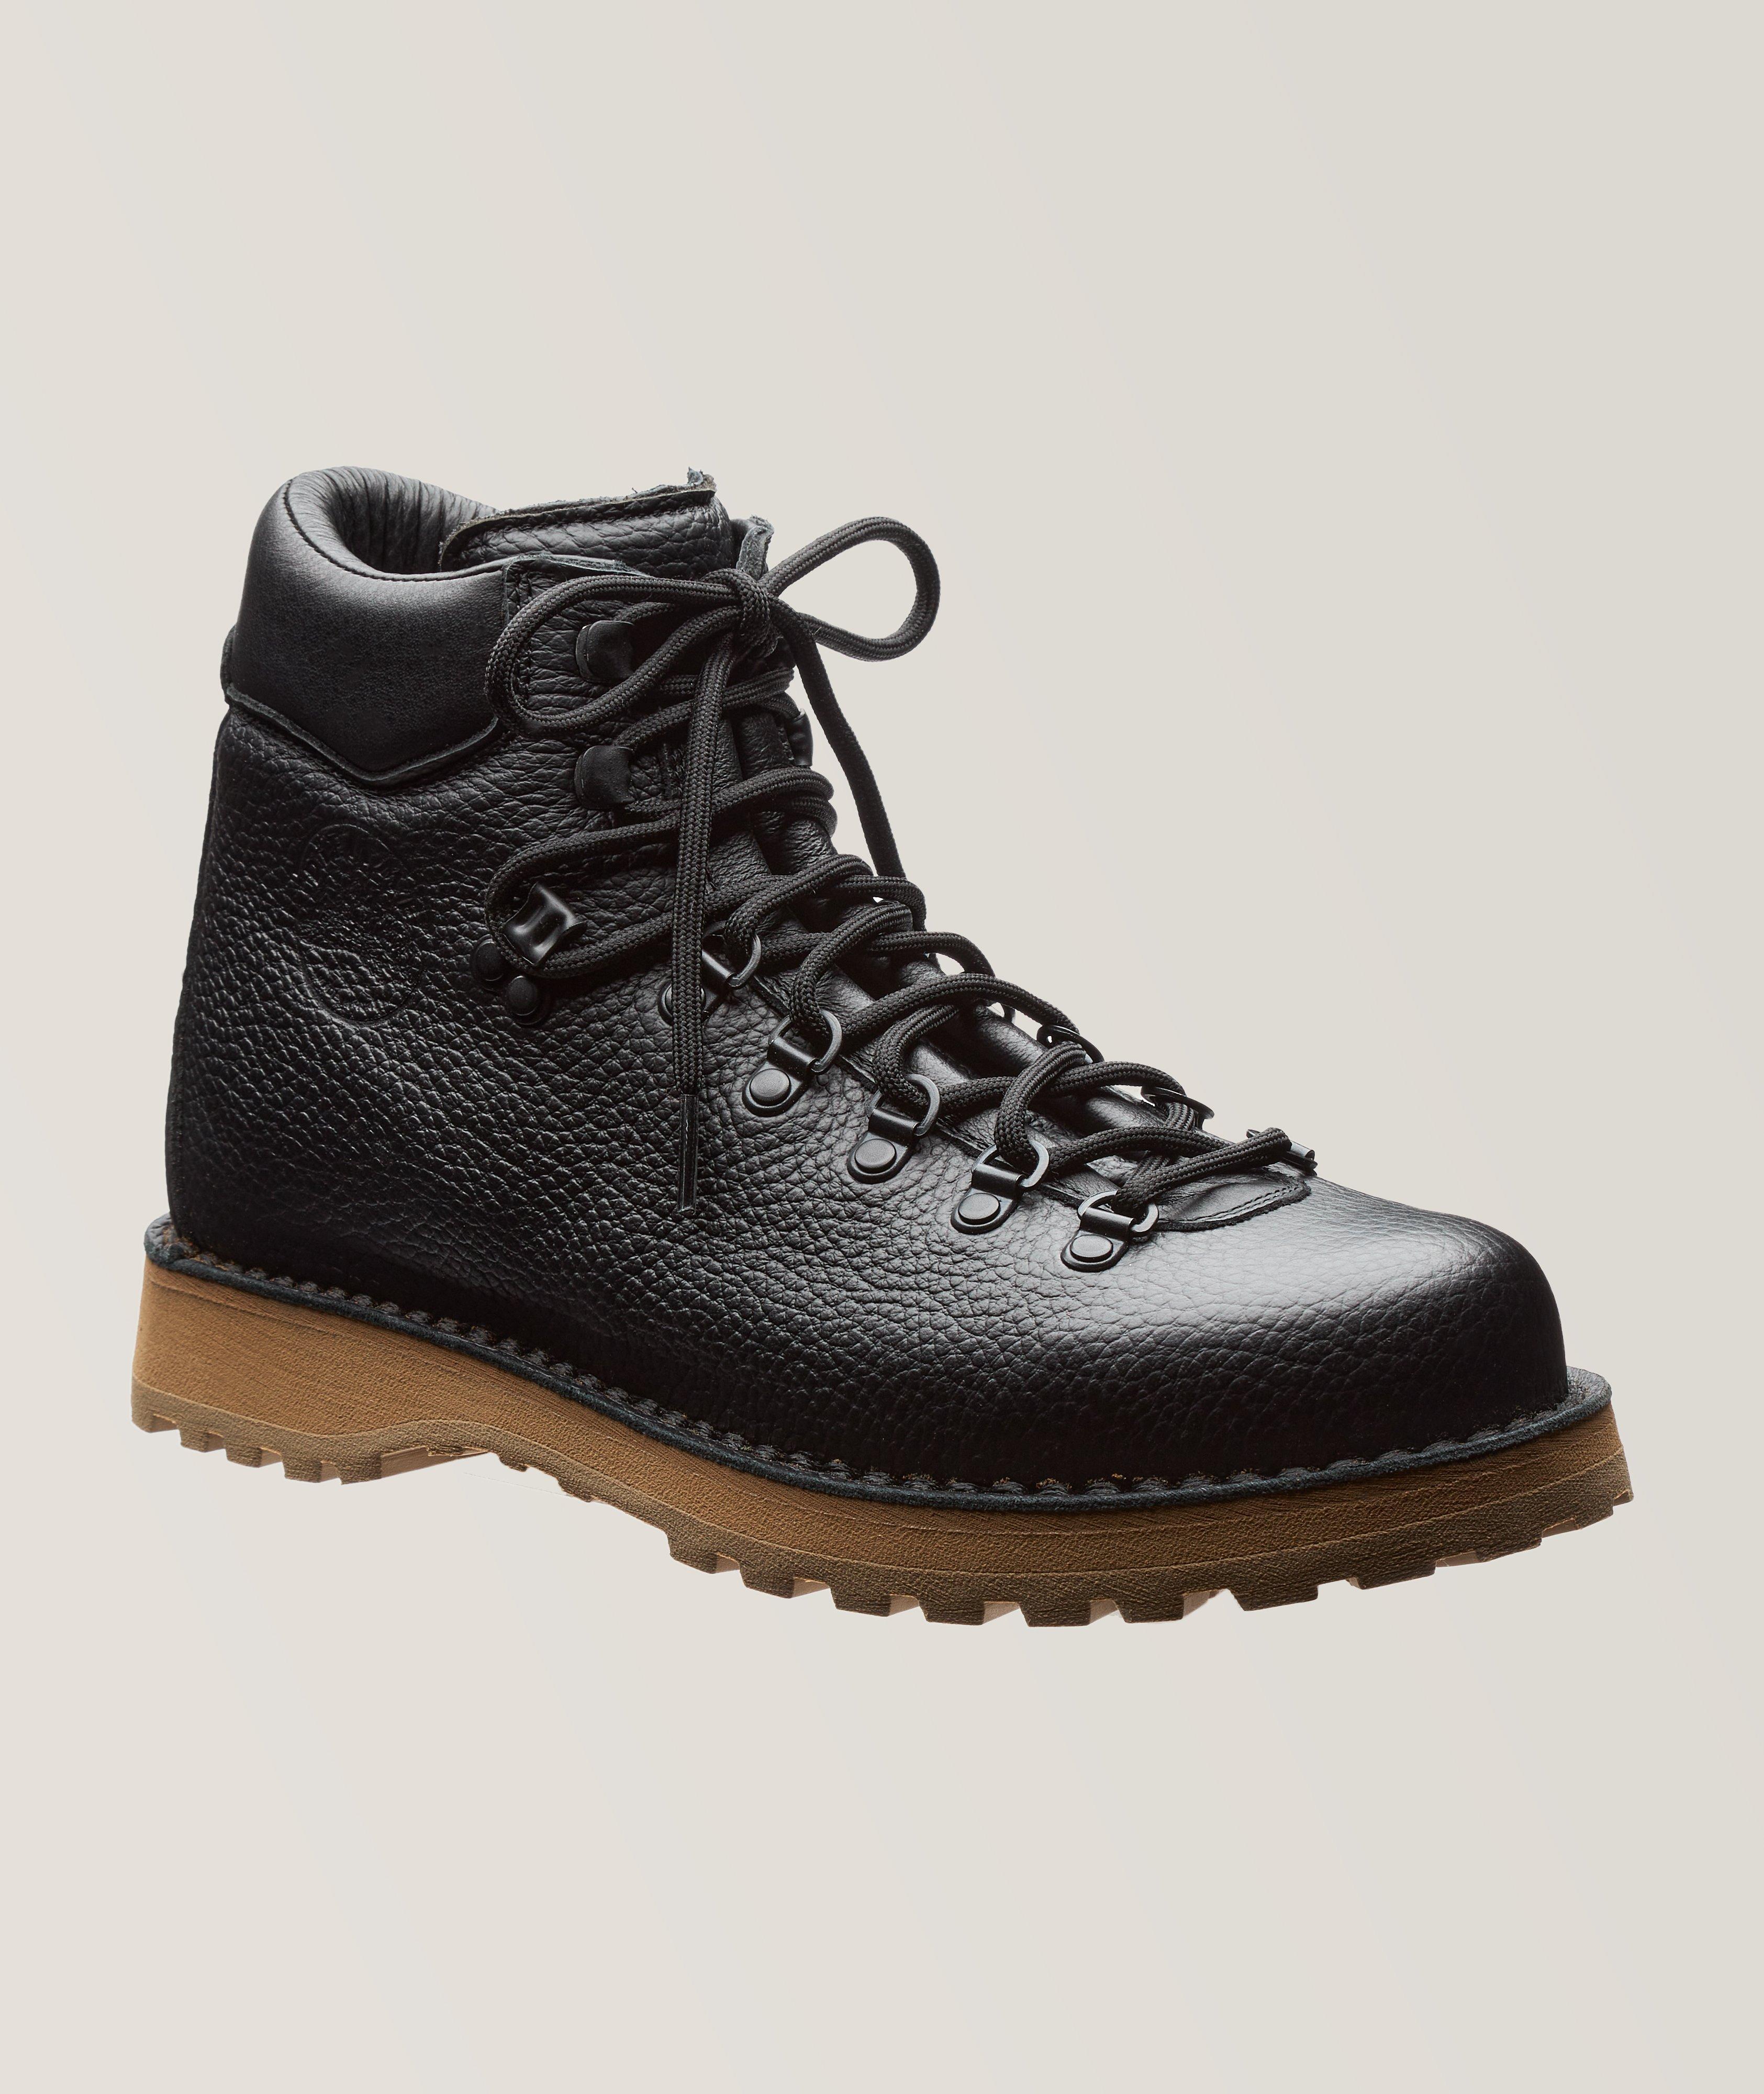 Roccia Vet Grain Leather Hiking Boots image 0